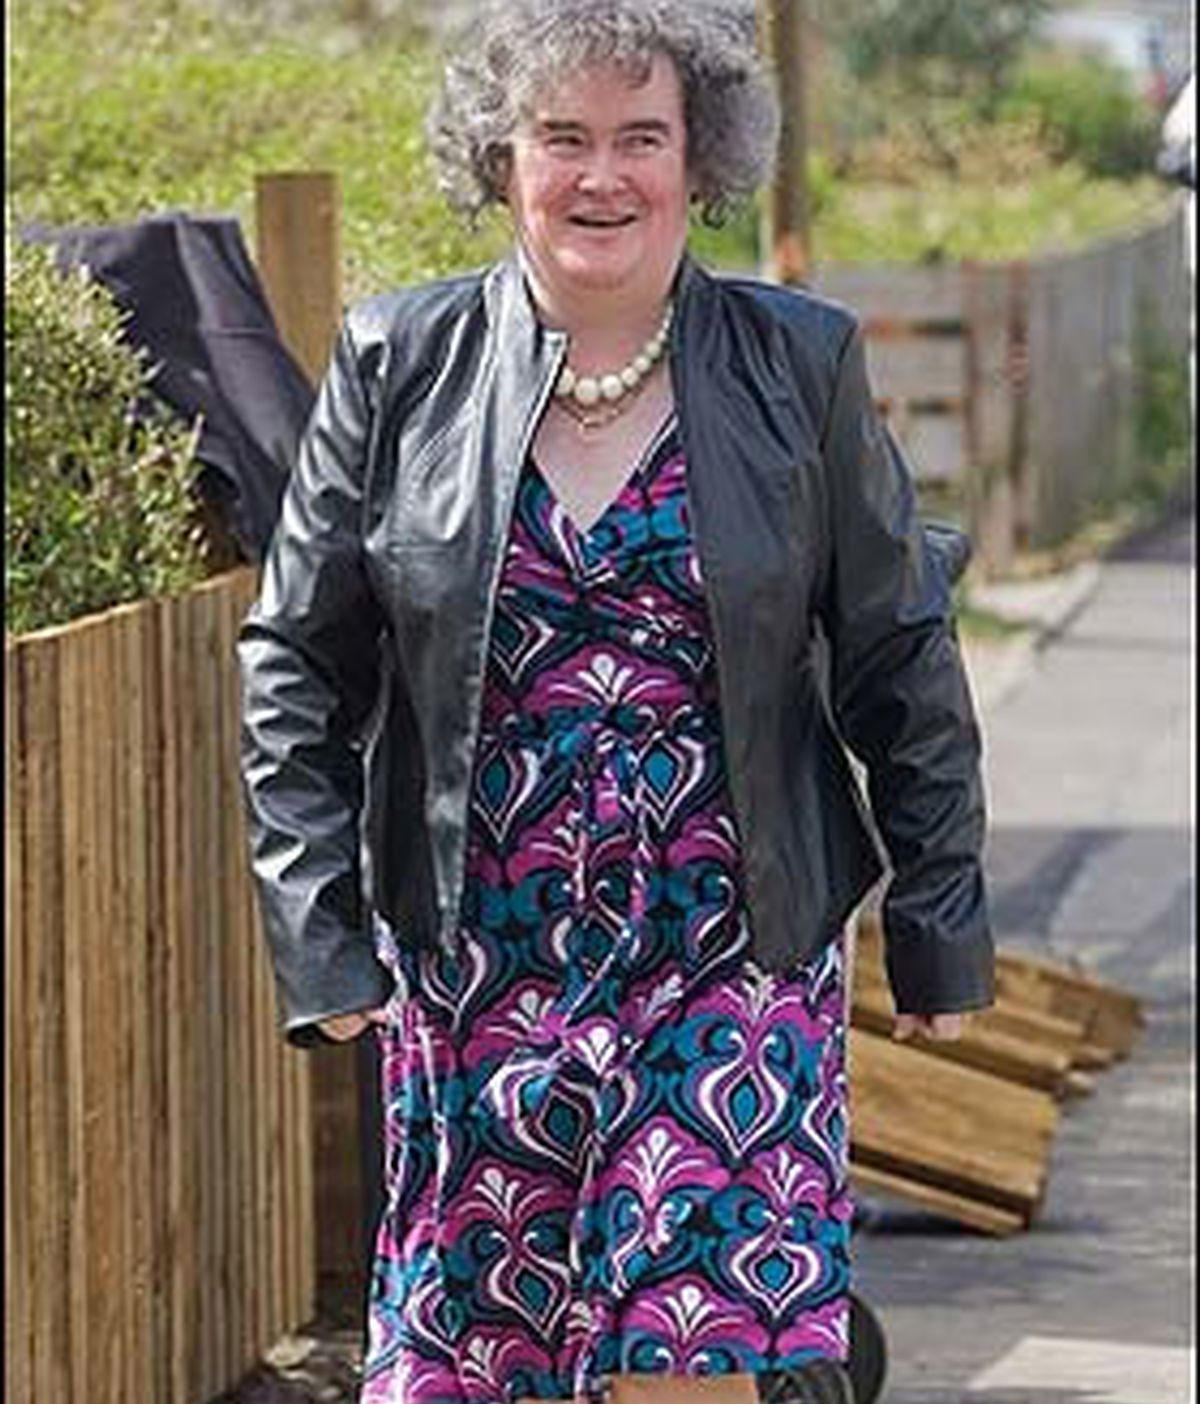 Susan Boyle ha modernizado su vestimenta. Foto: The Sun